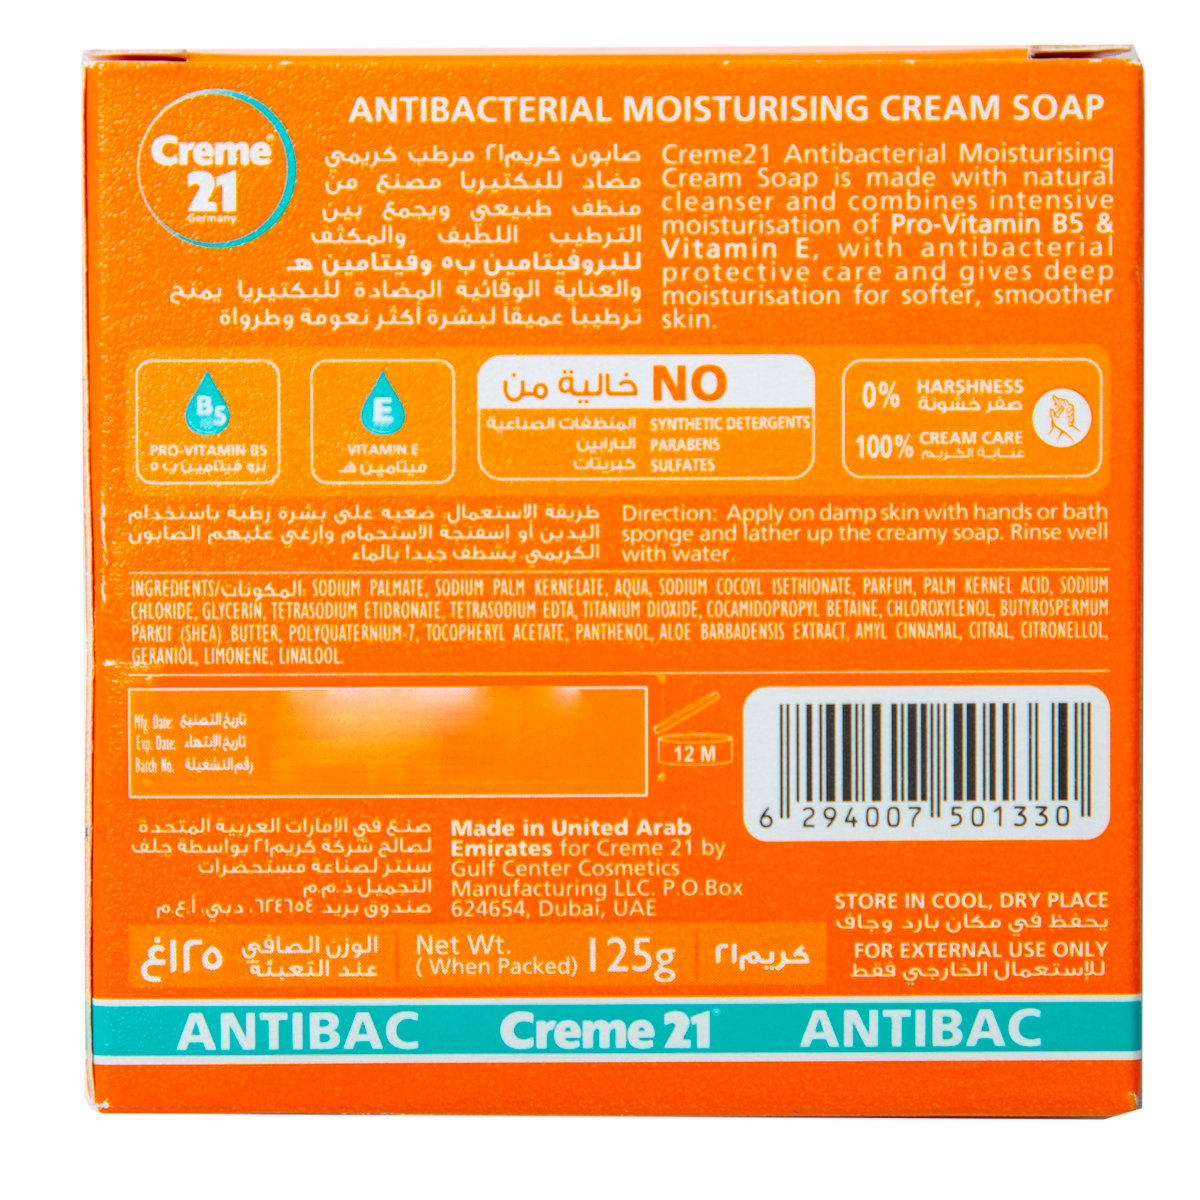 Creme 21 Anti-Bacterial Moisturizing Cream Soap 125g